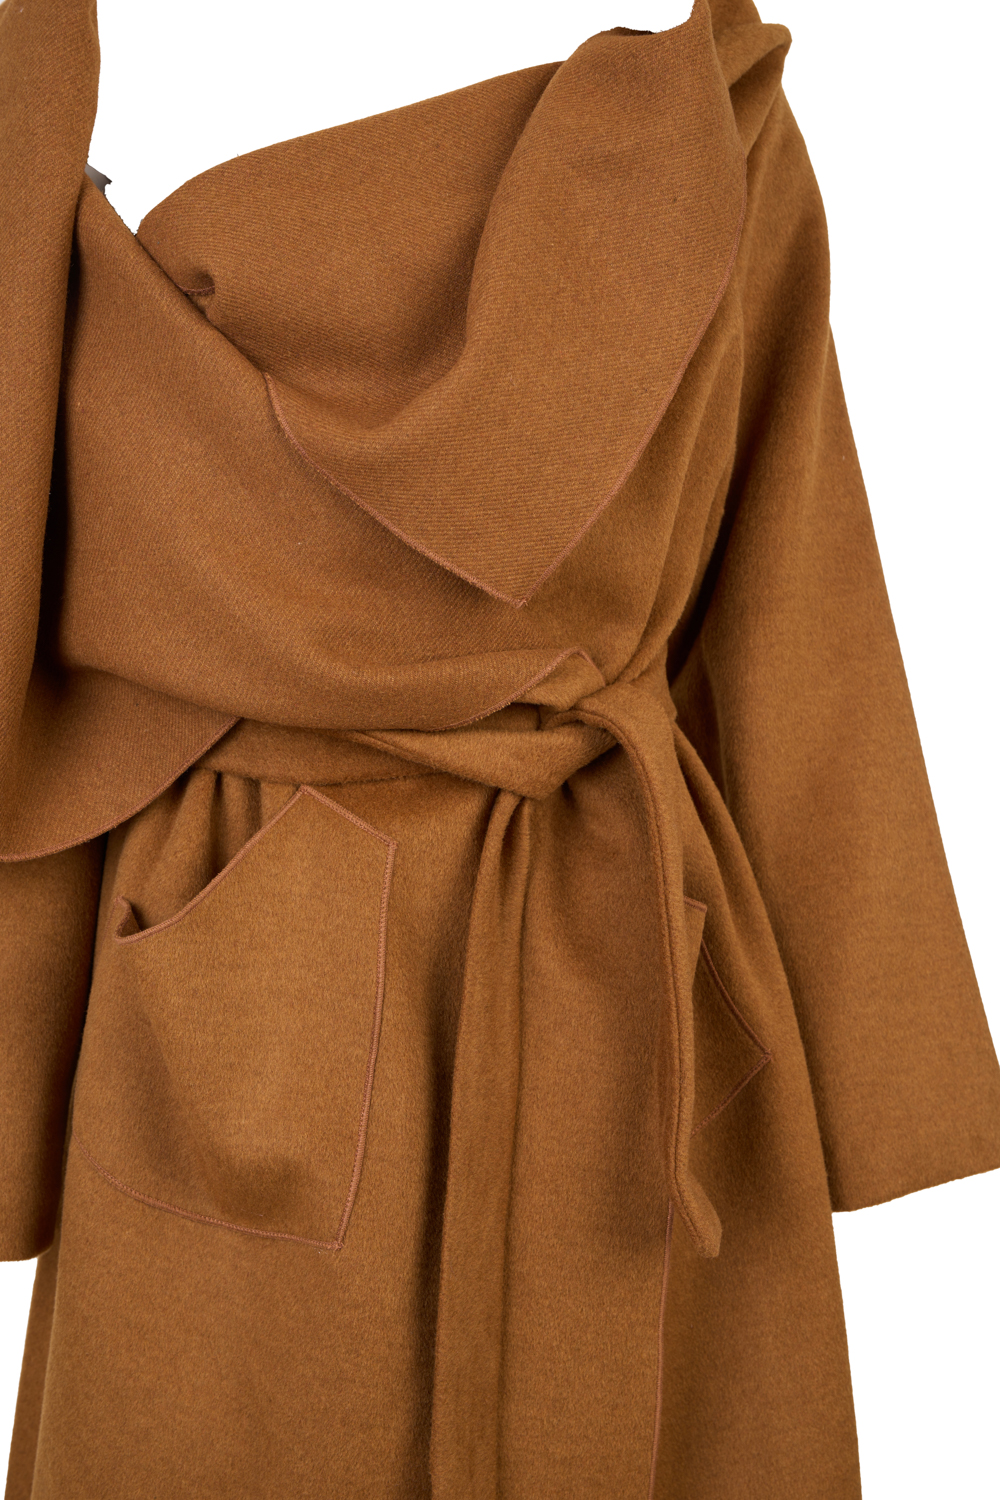 Draped Wrap Long Jacket with Shawl Collar ,Pockets and Tie Belt – Ioanna Kourbela